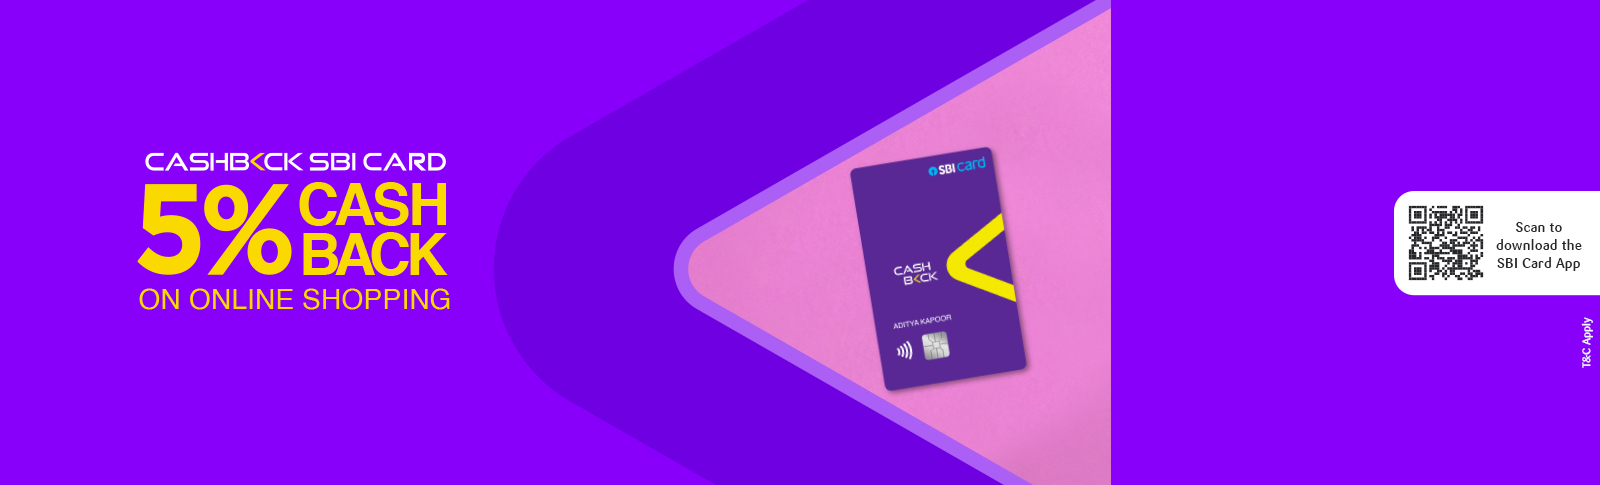 SBI Credit Card Online - SBI Credit Card Services | SBI Card